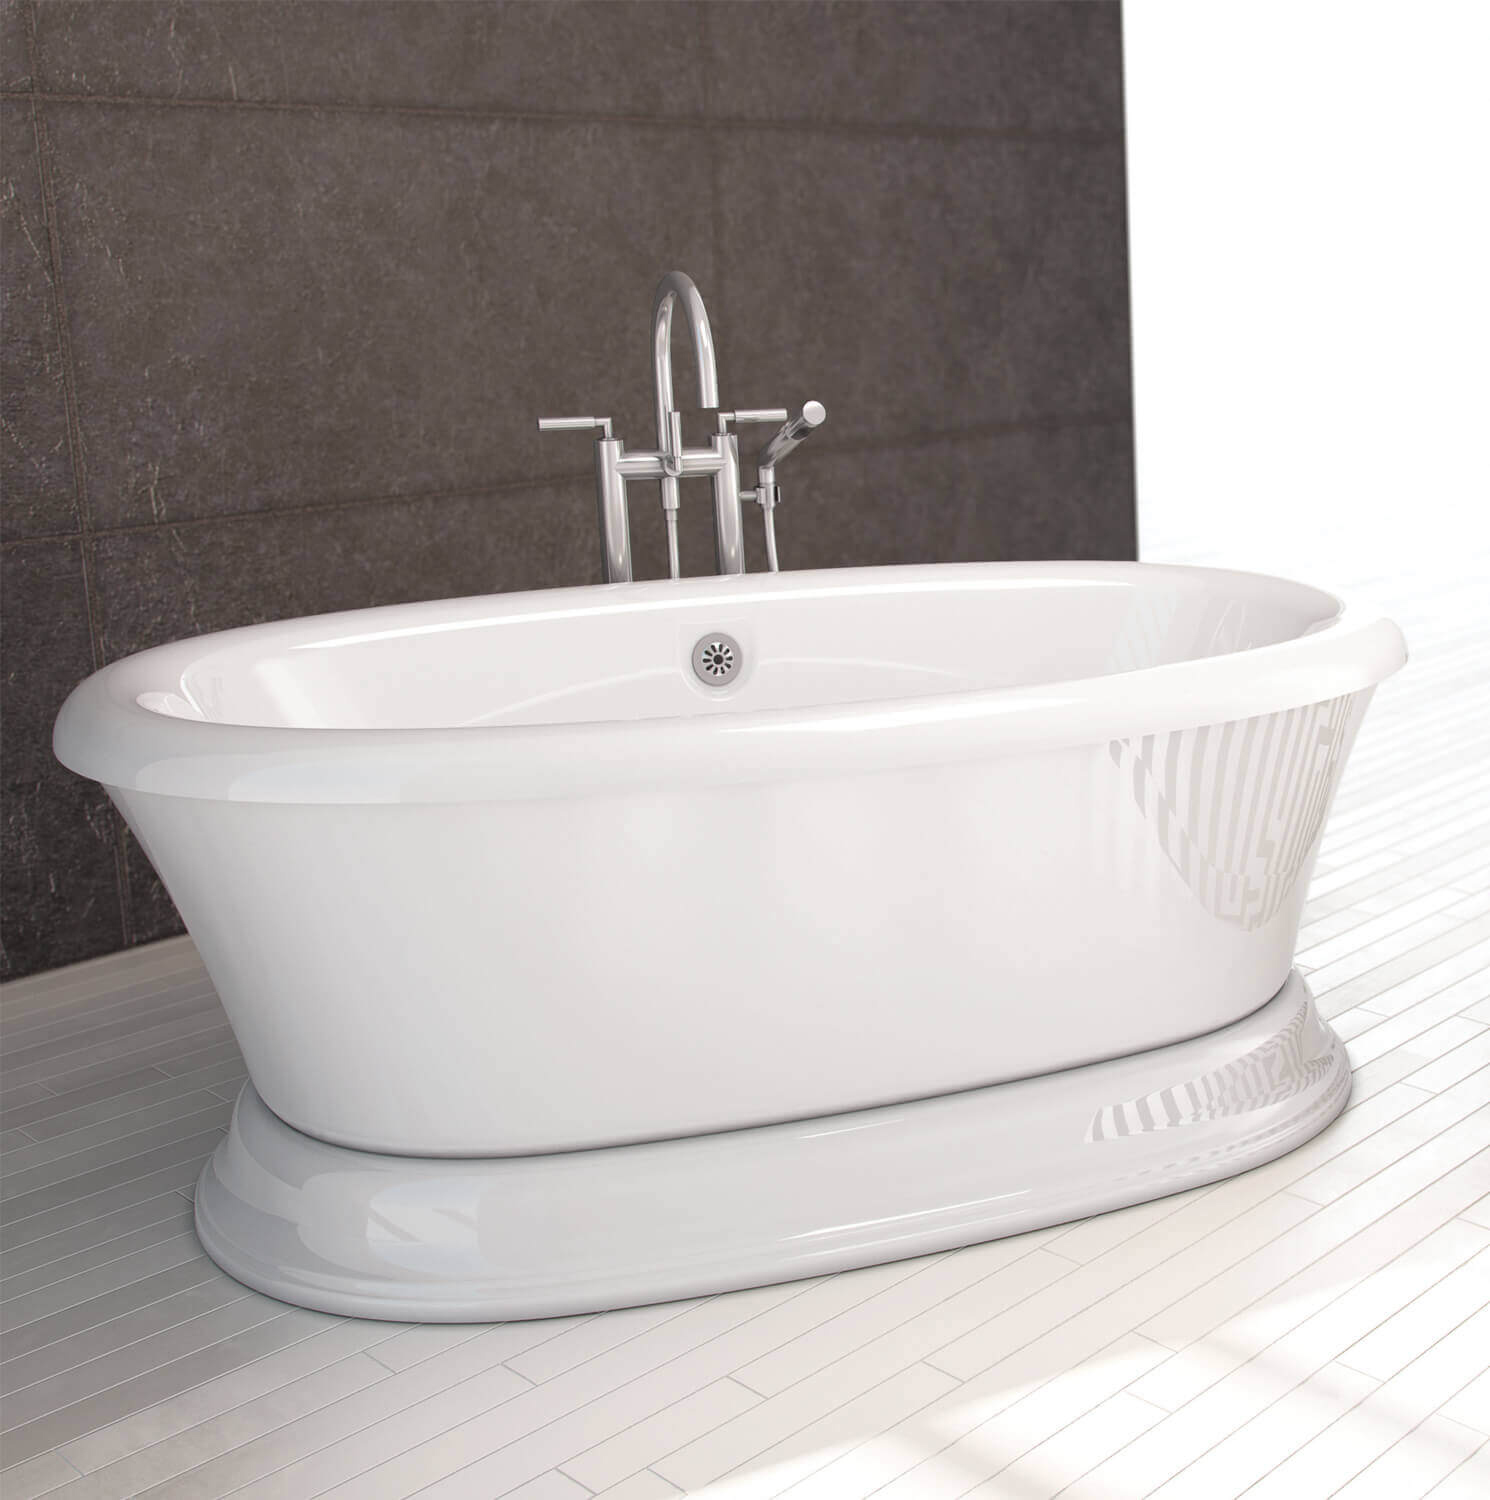 Bainultra Naos 6636 freestanding pedestal air jet bathtub for your modern bathroom